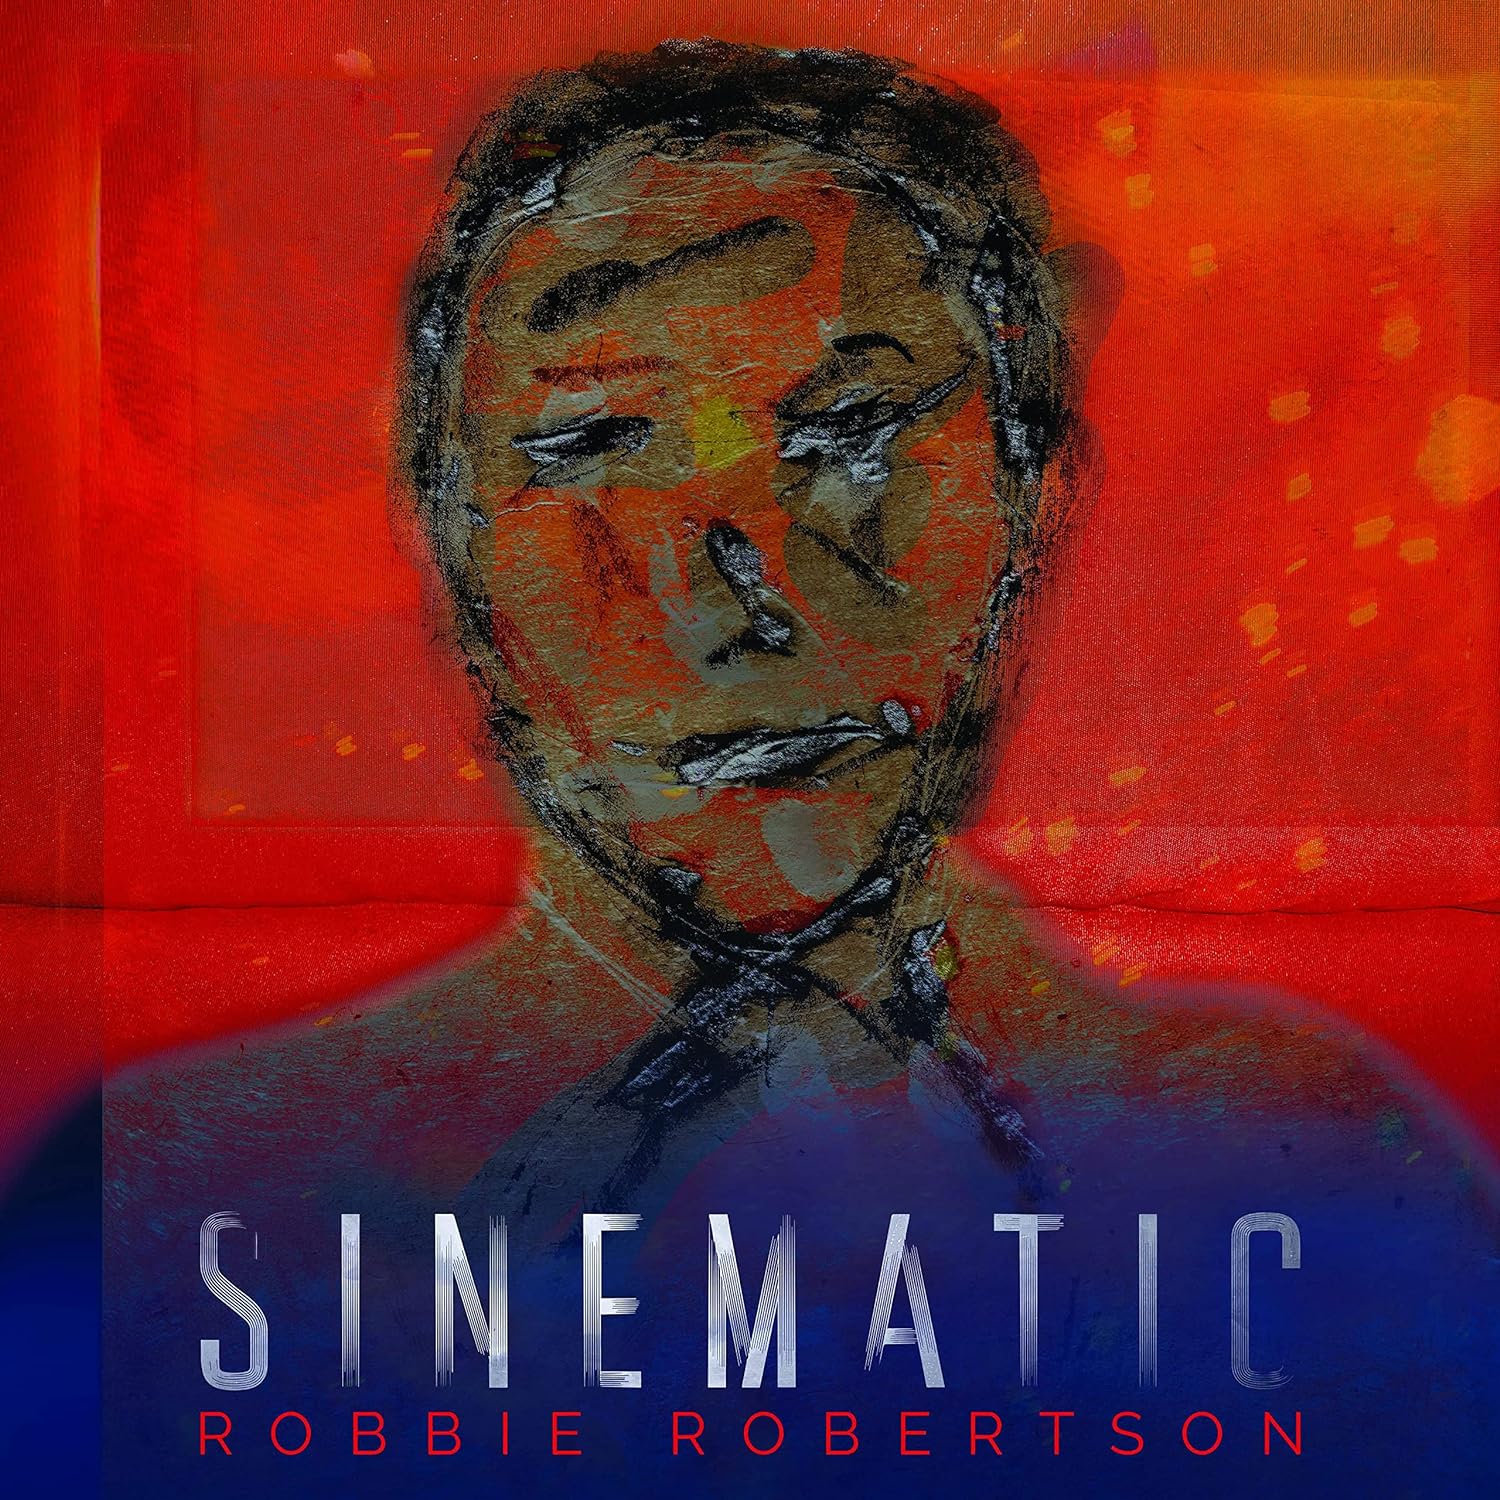 Robbie Robertson "Sinematic"